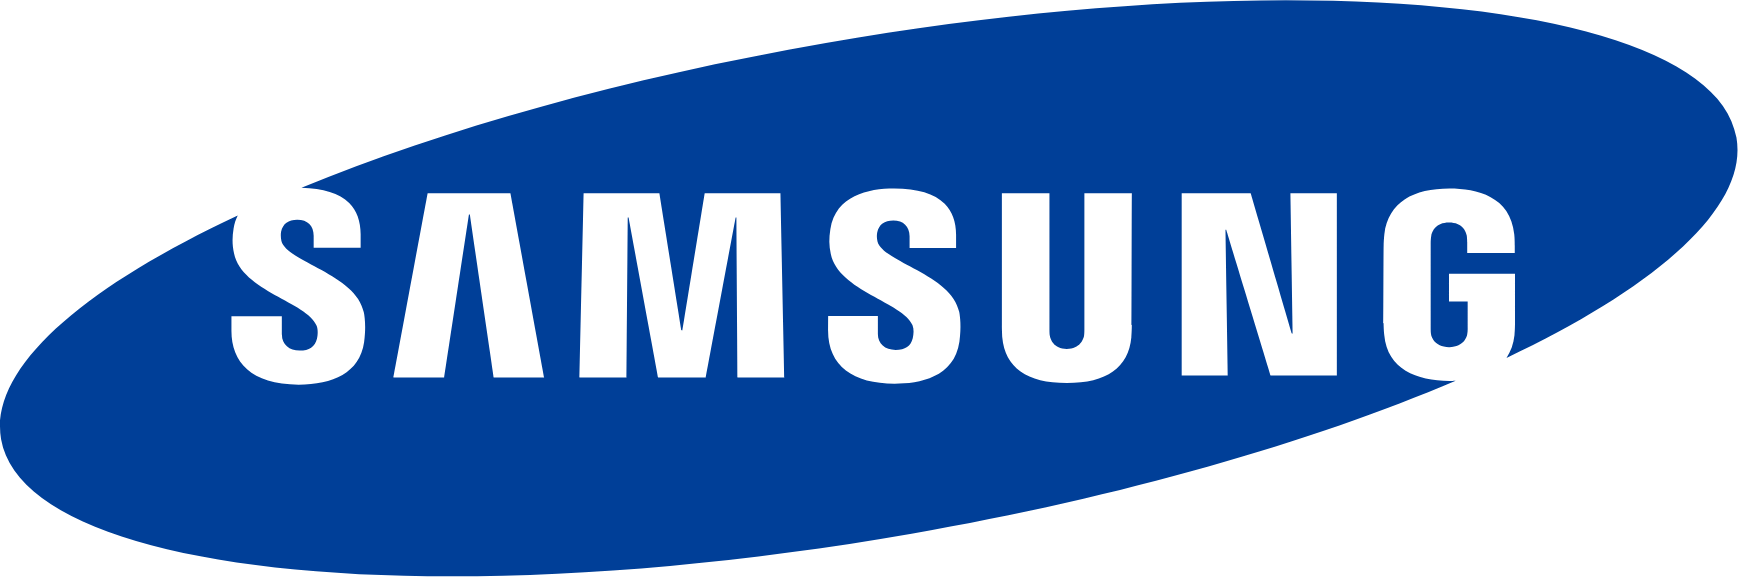 Samsung Life Insurance
 logo (transparent PNG)